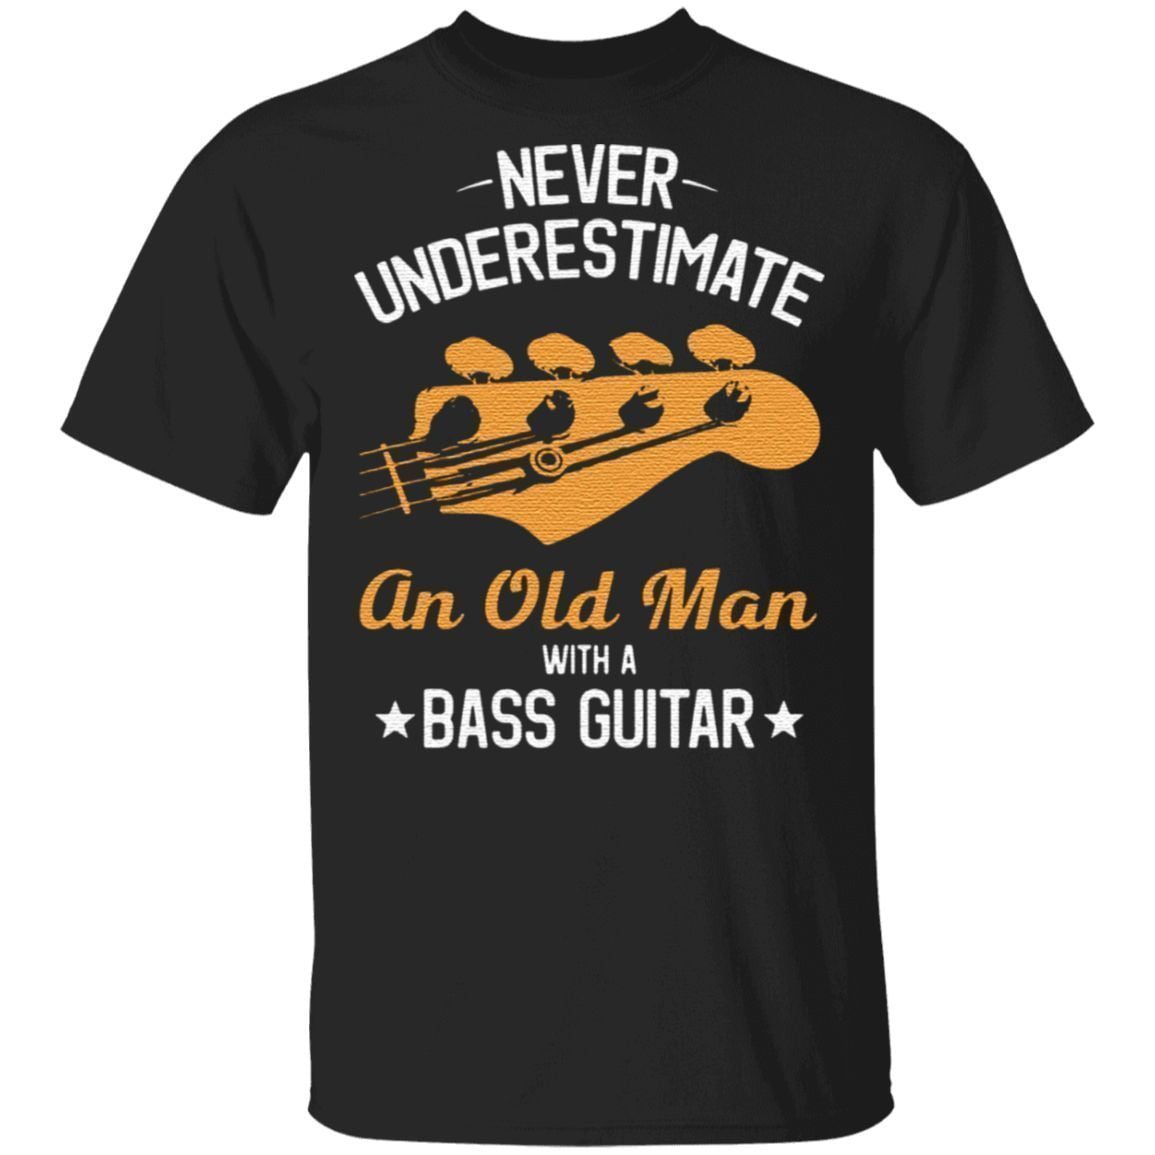 Never underestimate an old man with a bass guitar t shirt